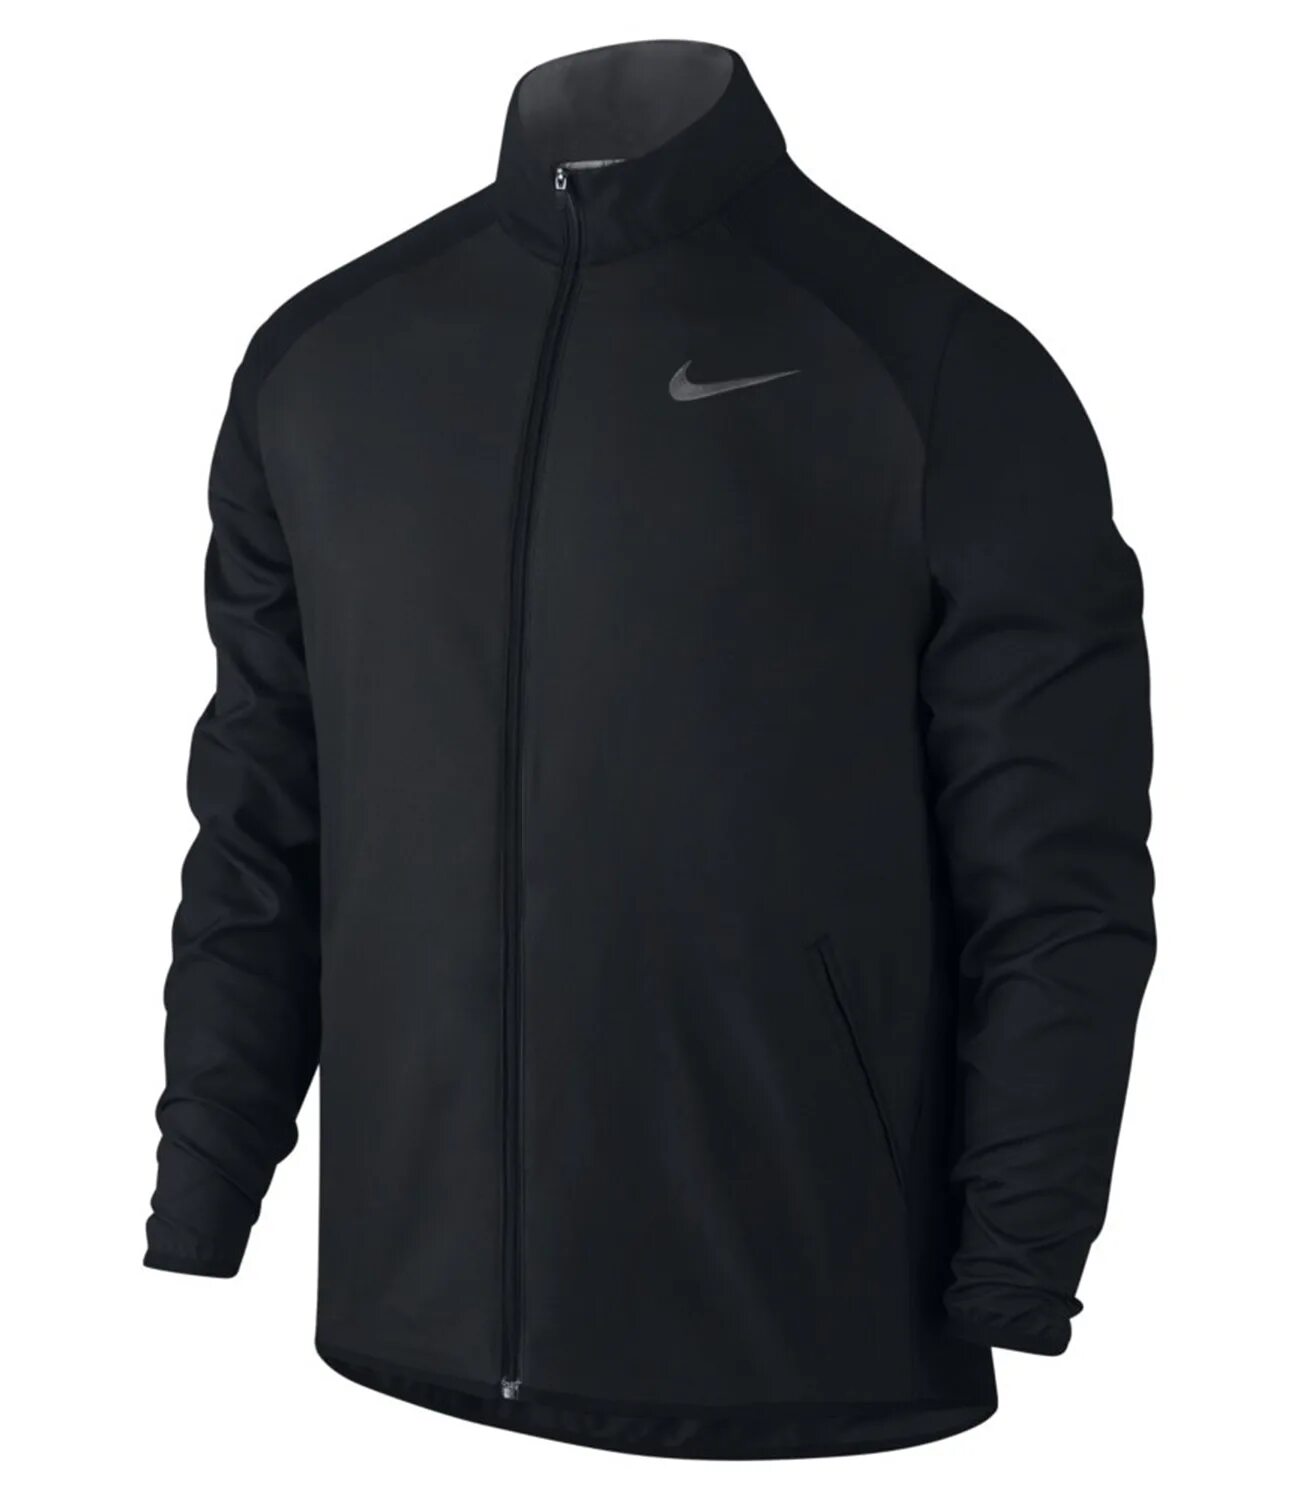 Найк драй. Nike Dry куртка. Куртка найк черная джакет. Ветровка Nike Dri Fit zip. Найк драй фит куртка мужская.